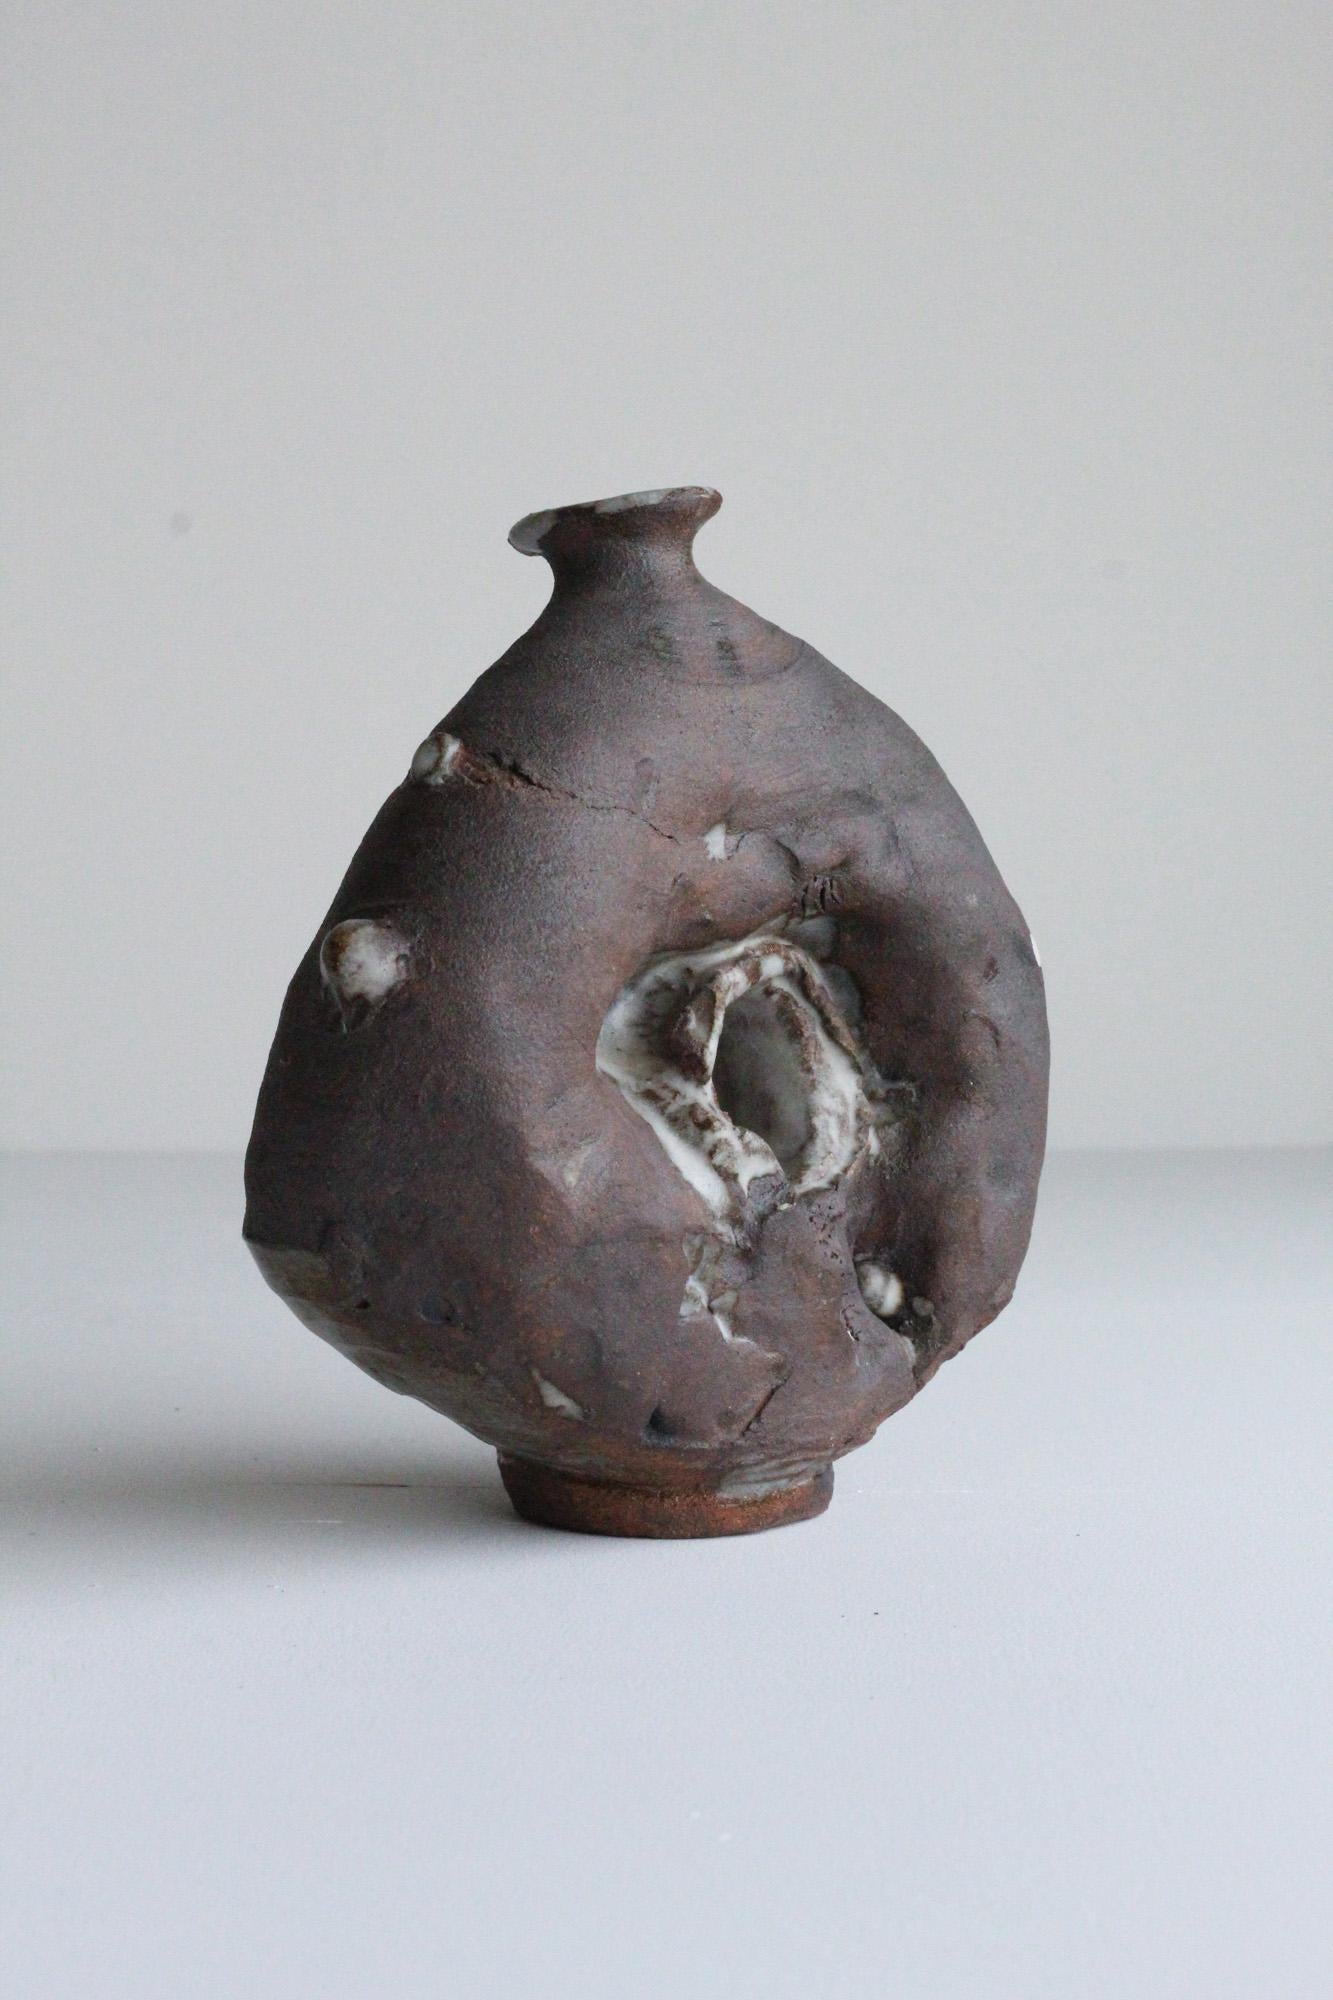 American Sculptural Ceramic Vessel, Organic Brutalist